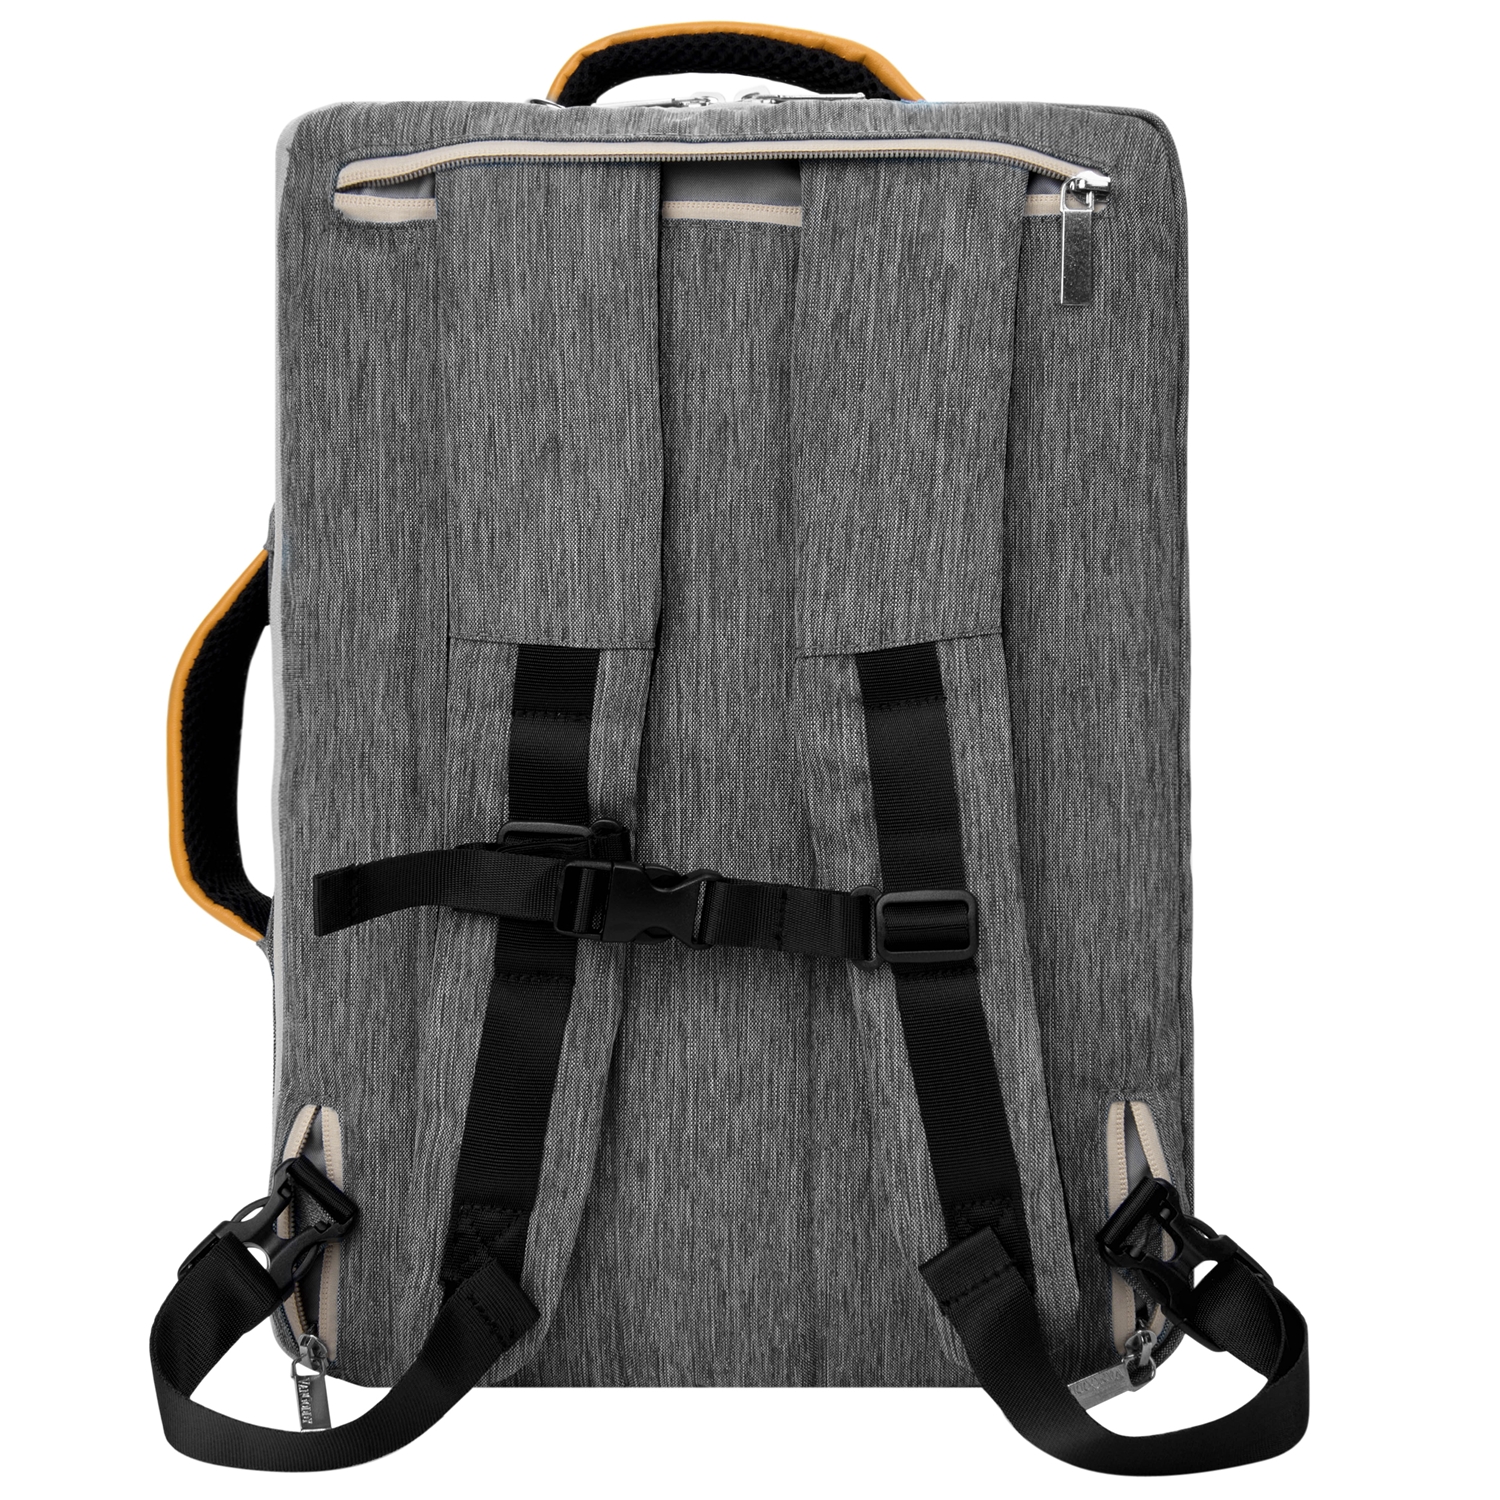 (Gray) Vangoddy Slate Laptop Bag 17            